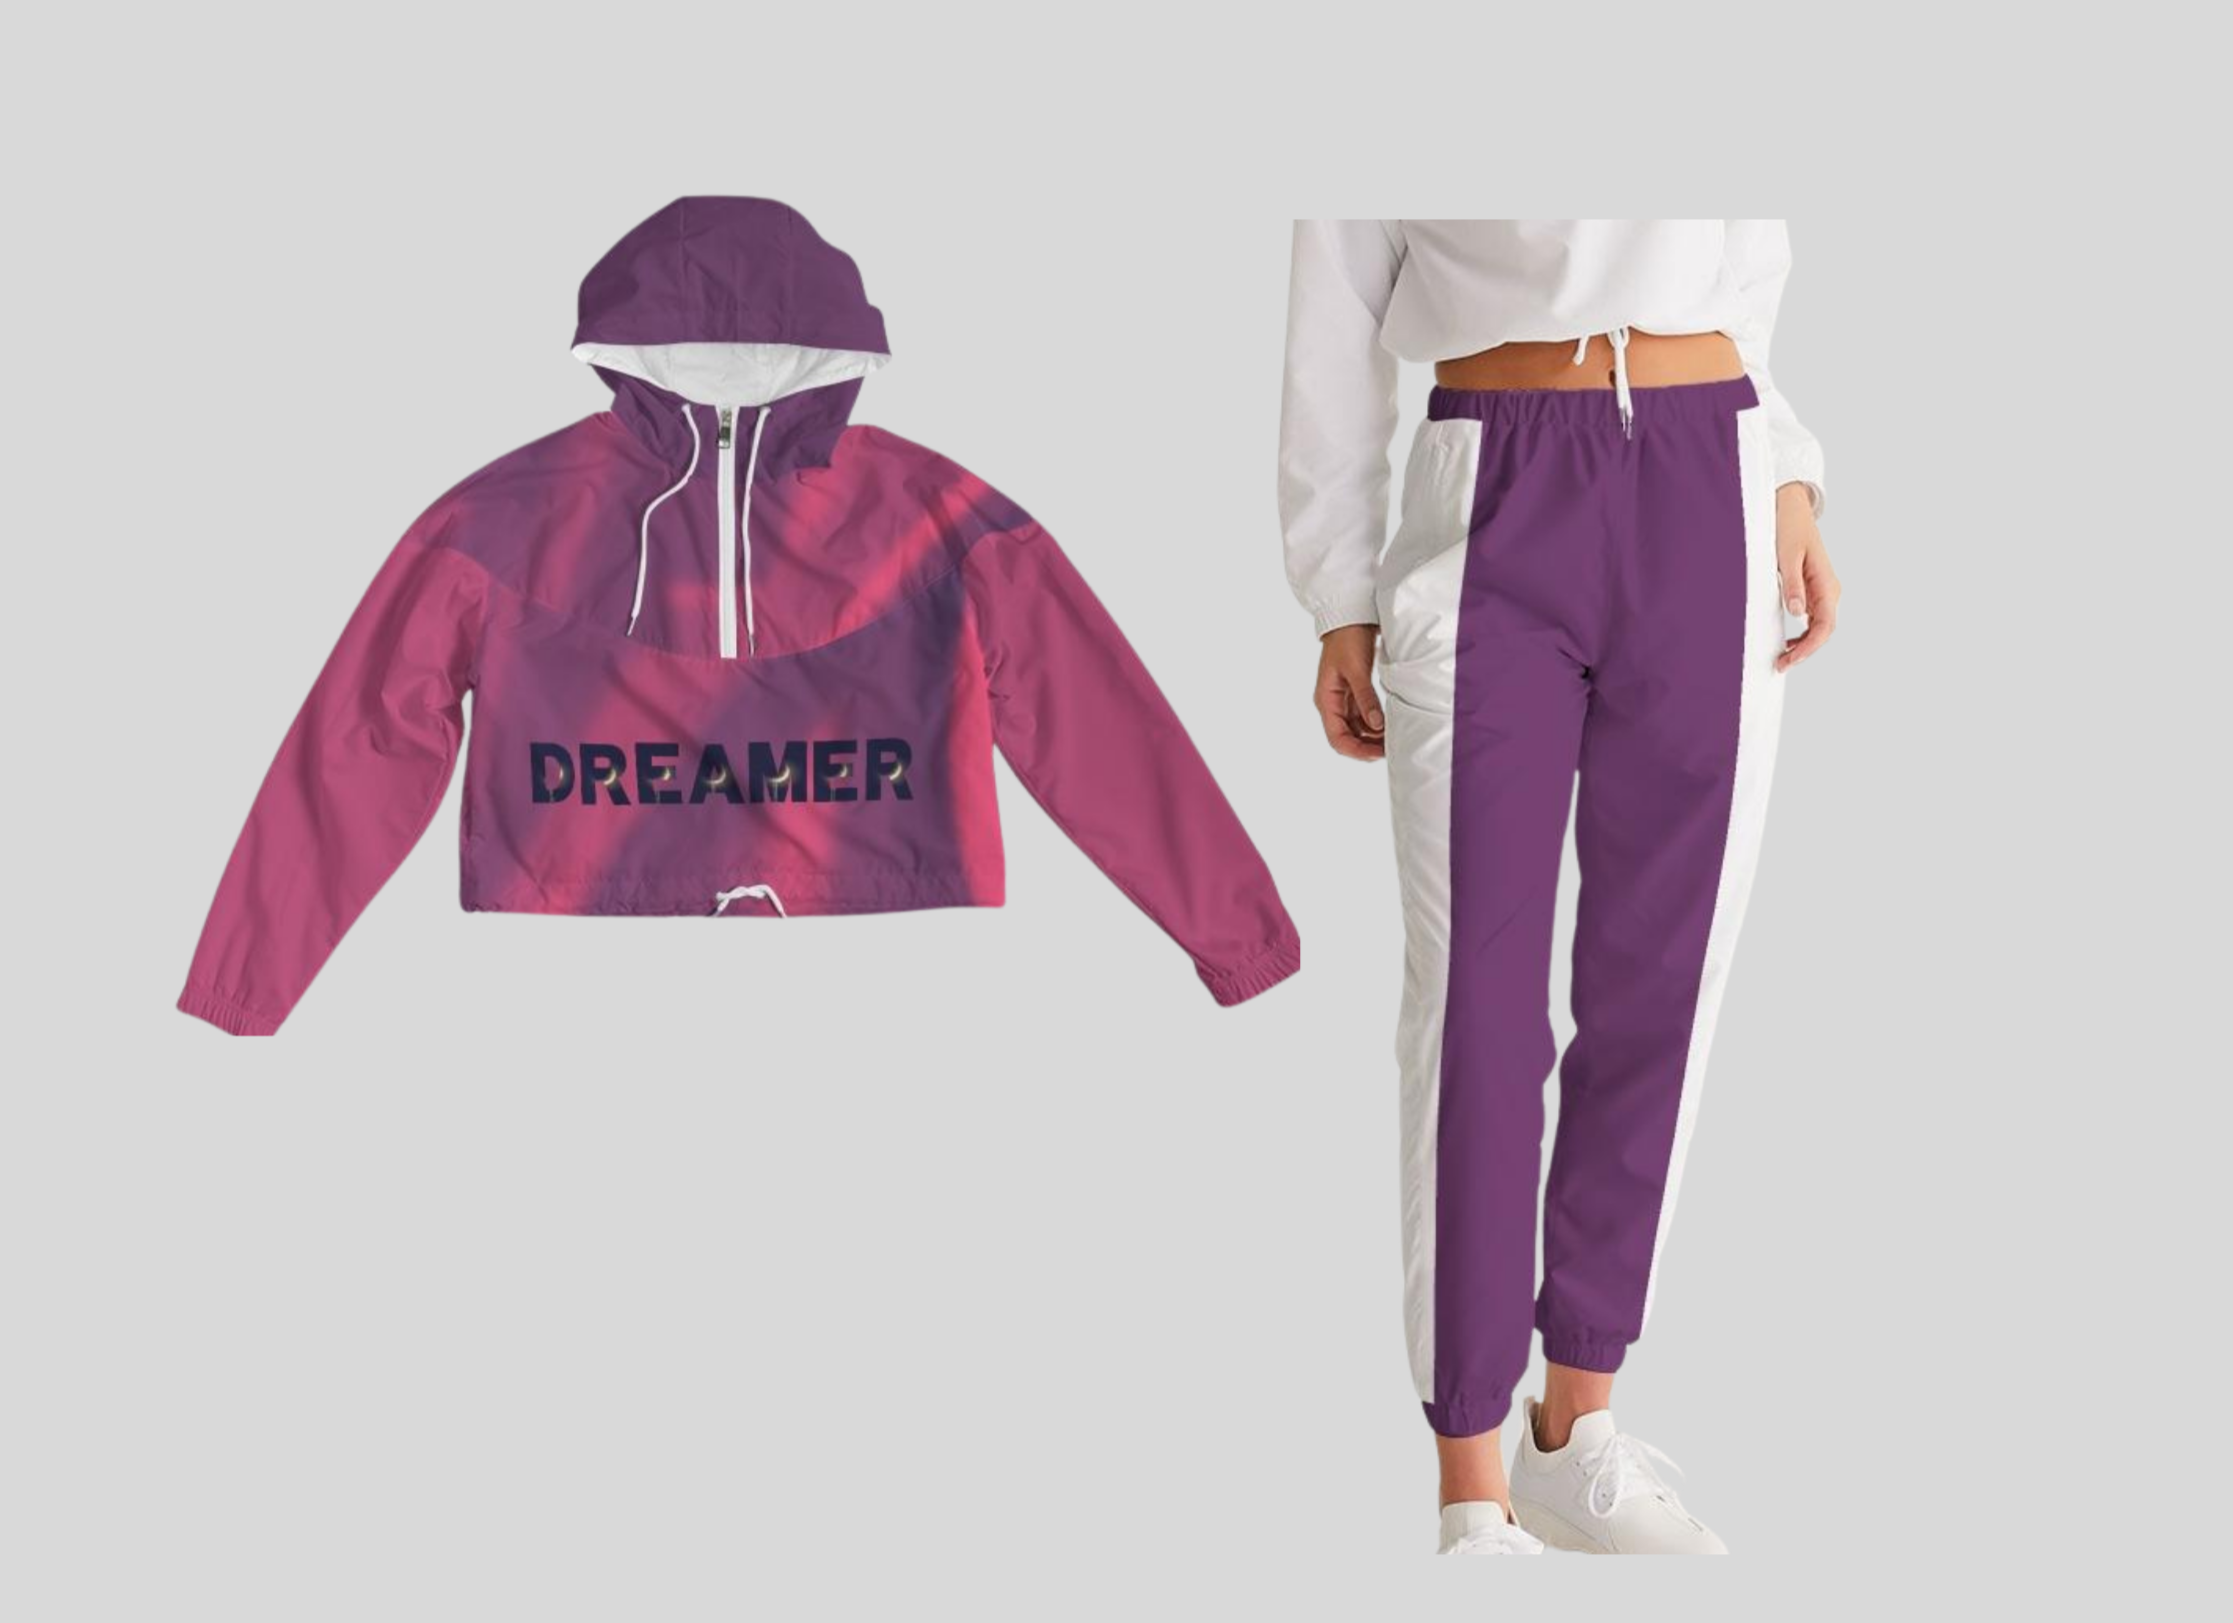 Dreamer Women's Track Suit